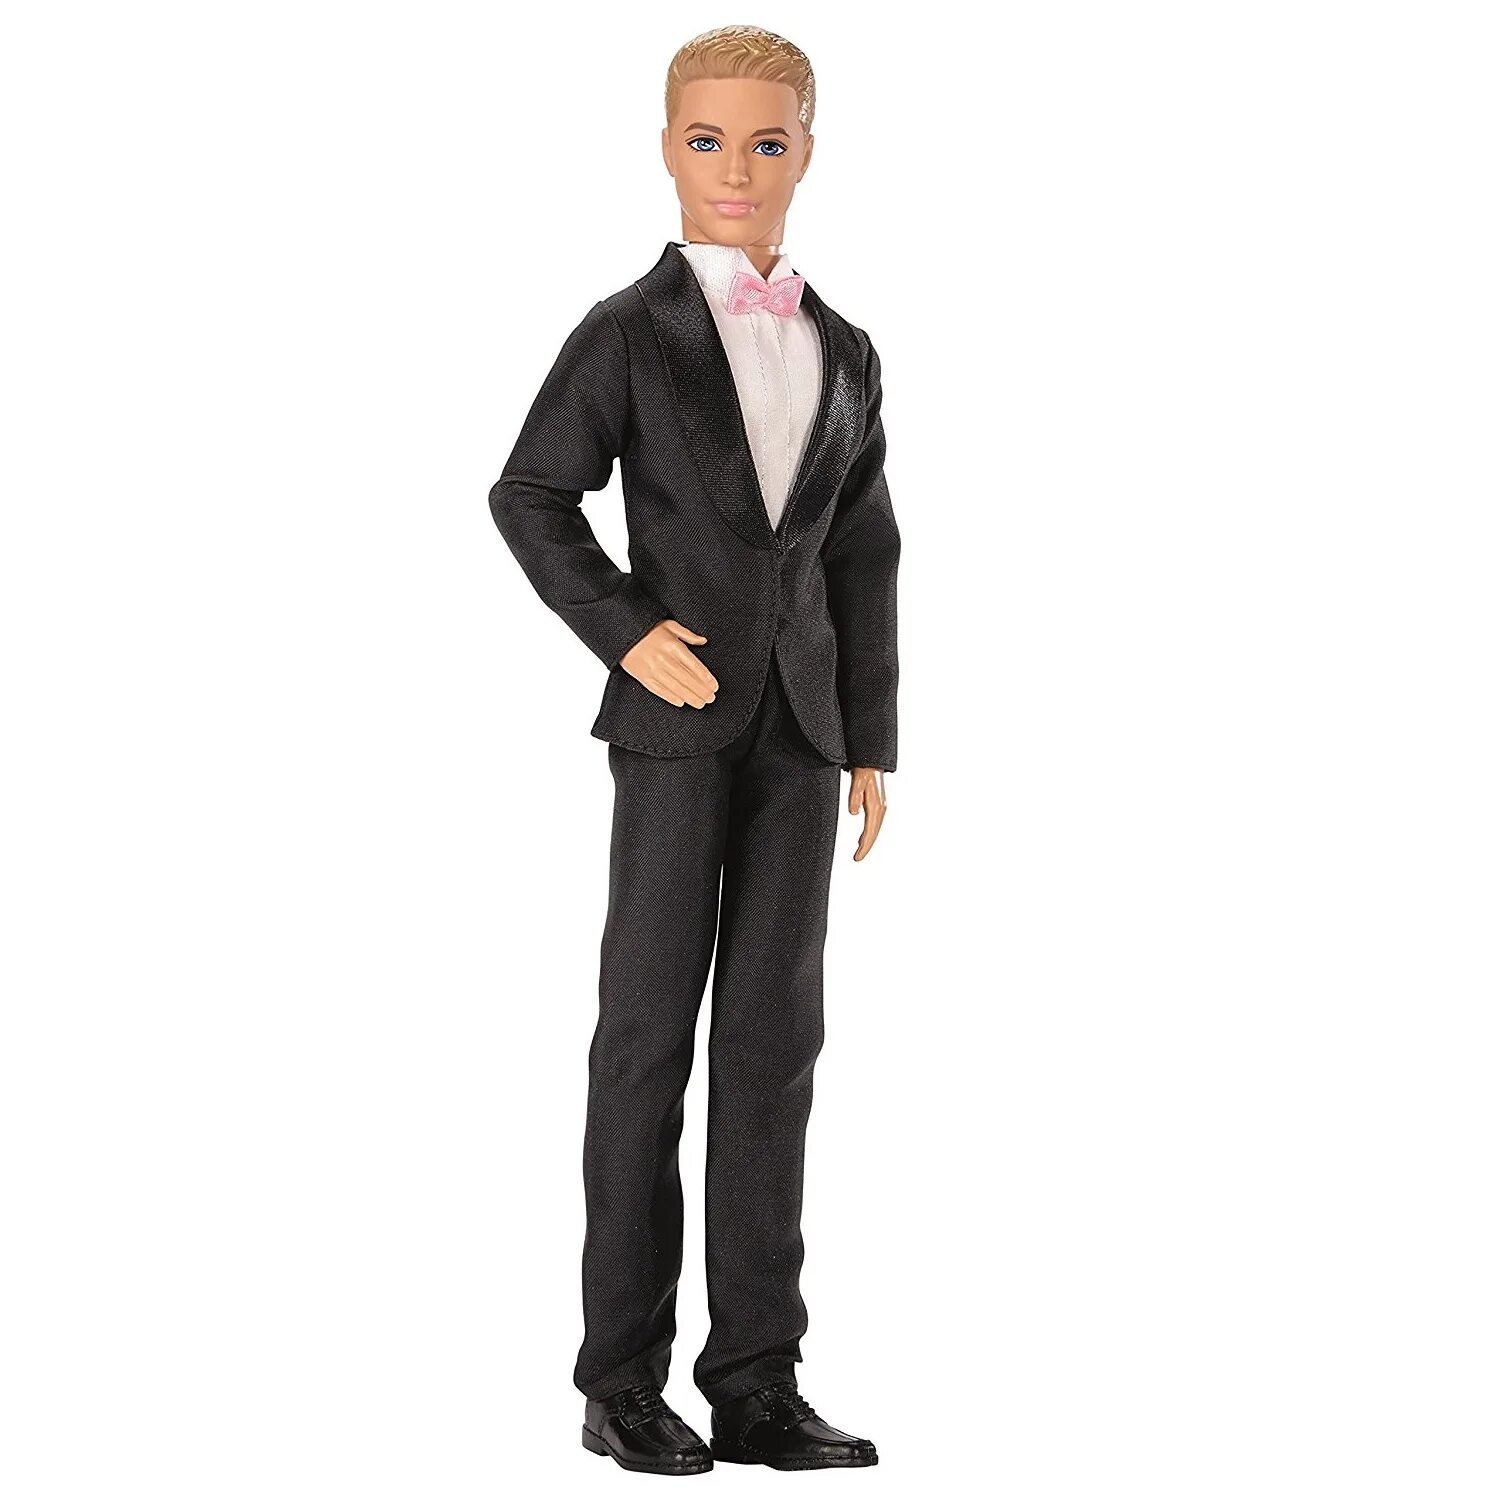 Куклы Барби и Кен. Кен кукла Маттел. Dvp39 Barbie Кен. Кукла Barbie Кен-жених.